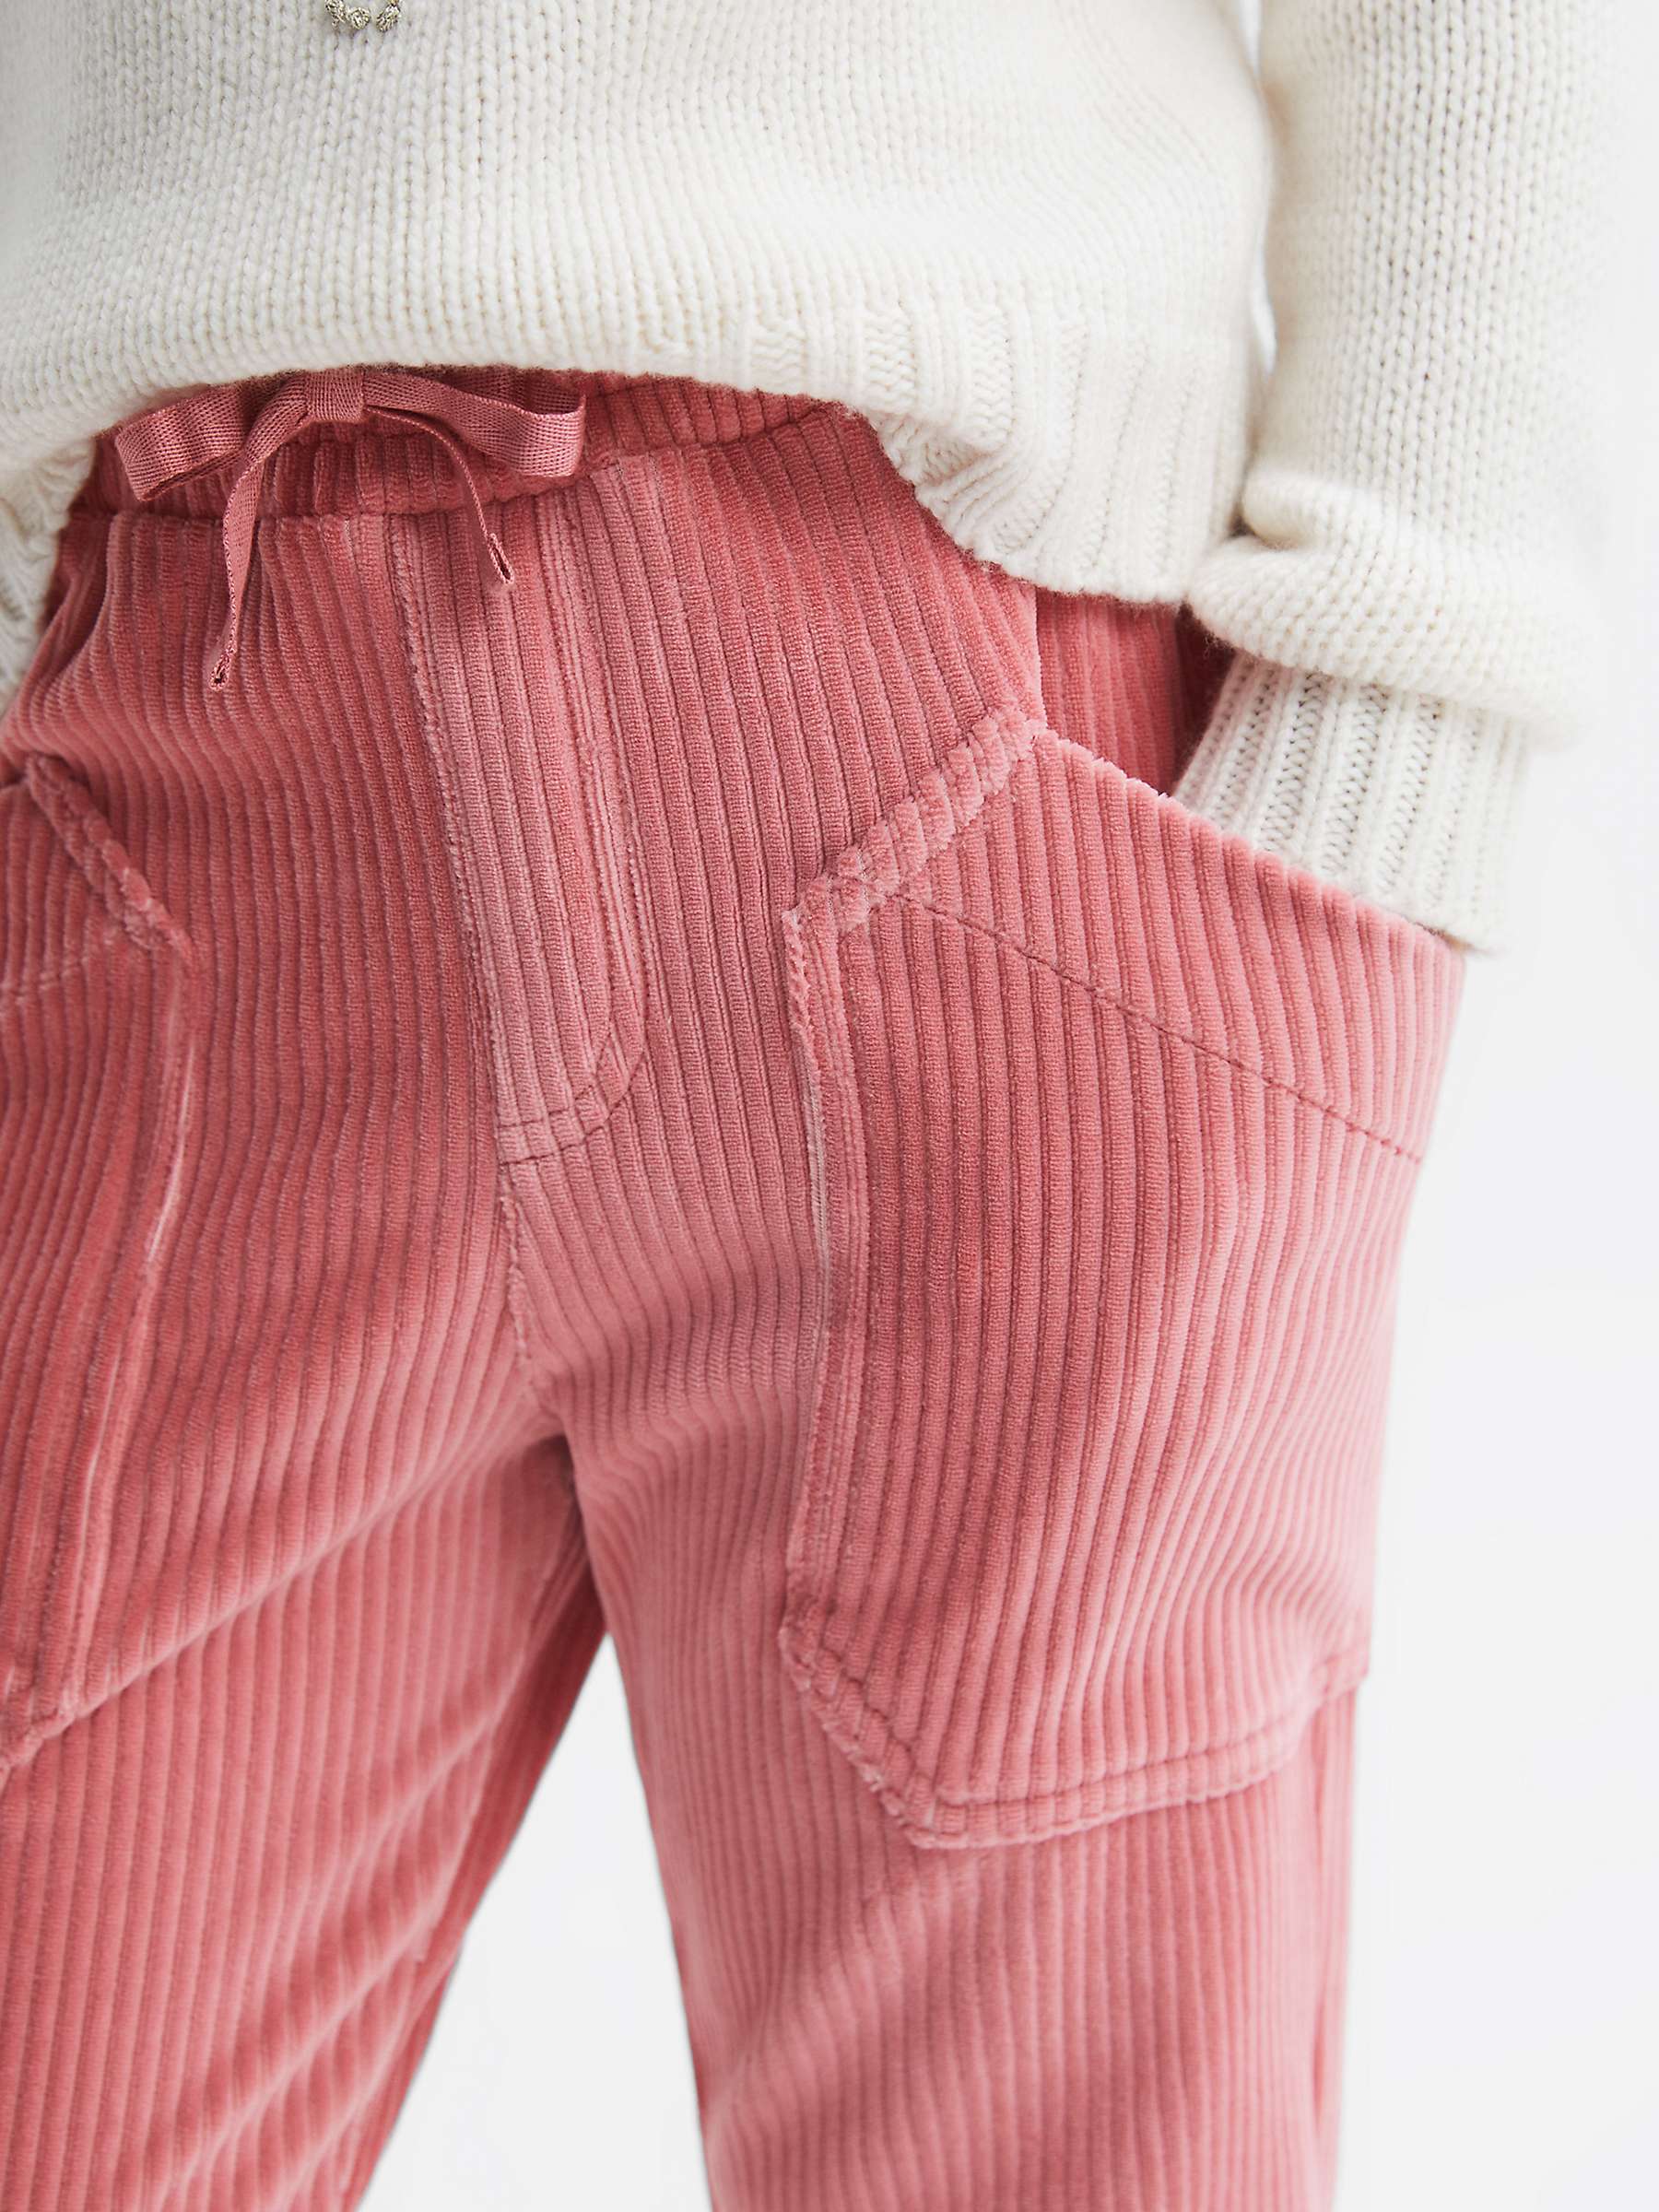 Buy Reiss Kids' Kora Cord Trousers, Pink Online at johnlewis.com